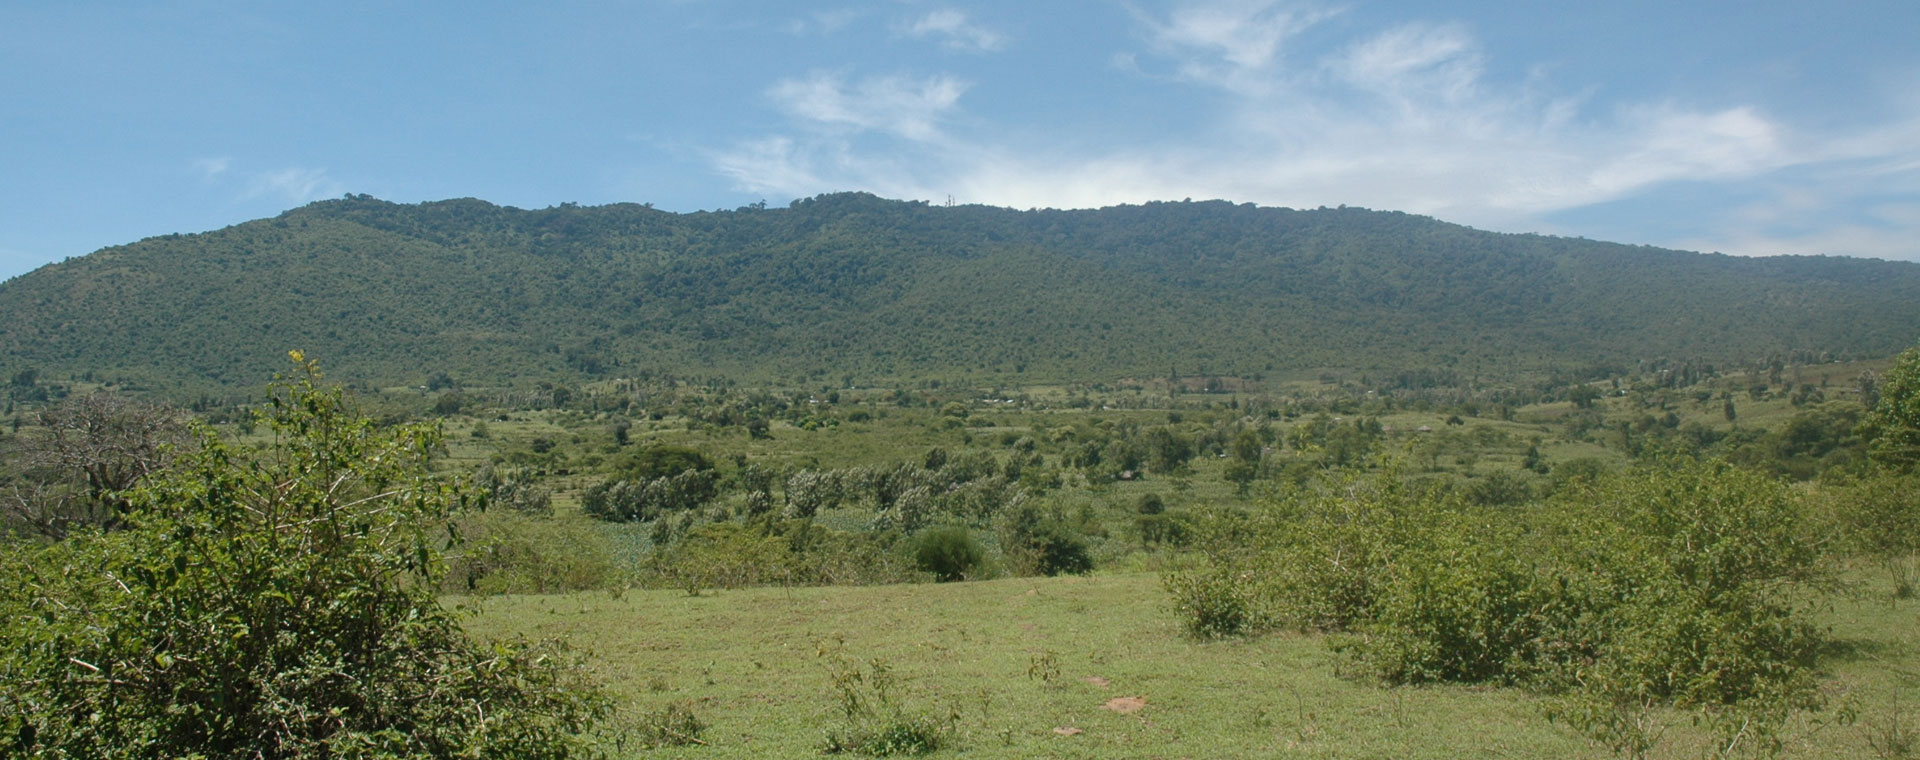 Oldonyo Sabuk National Park 